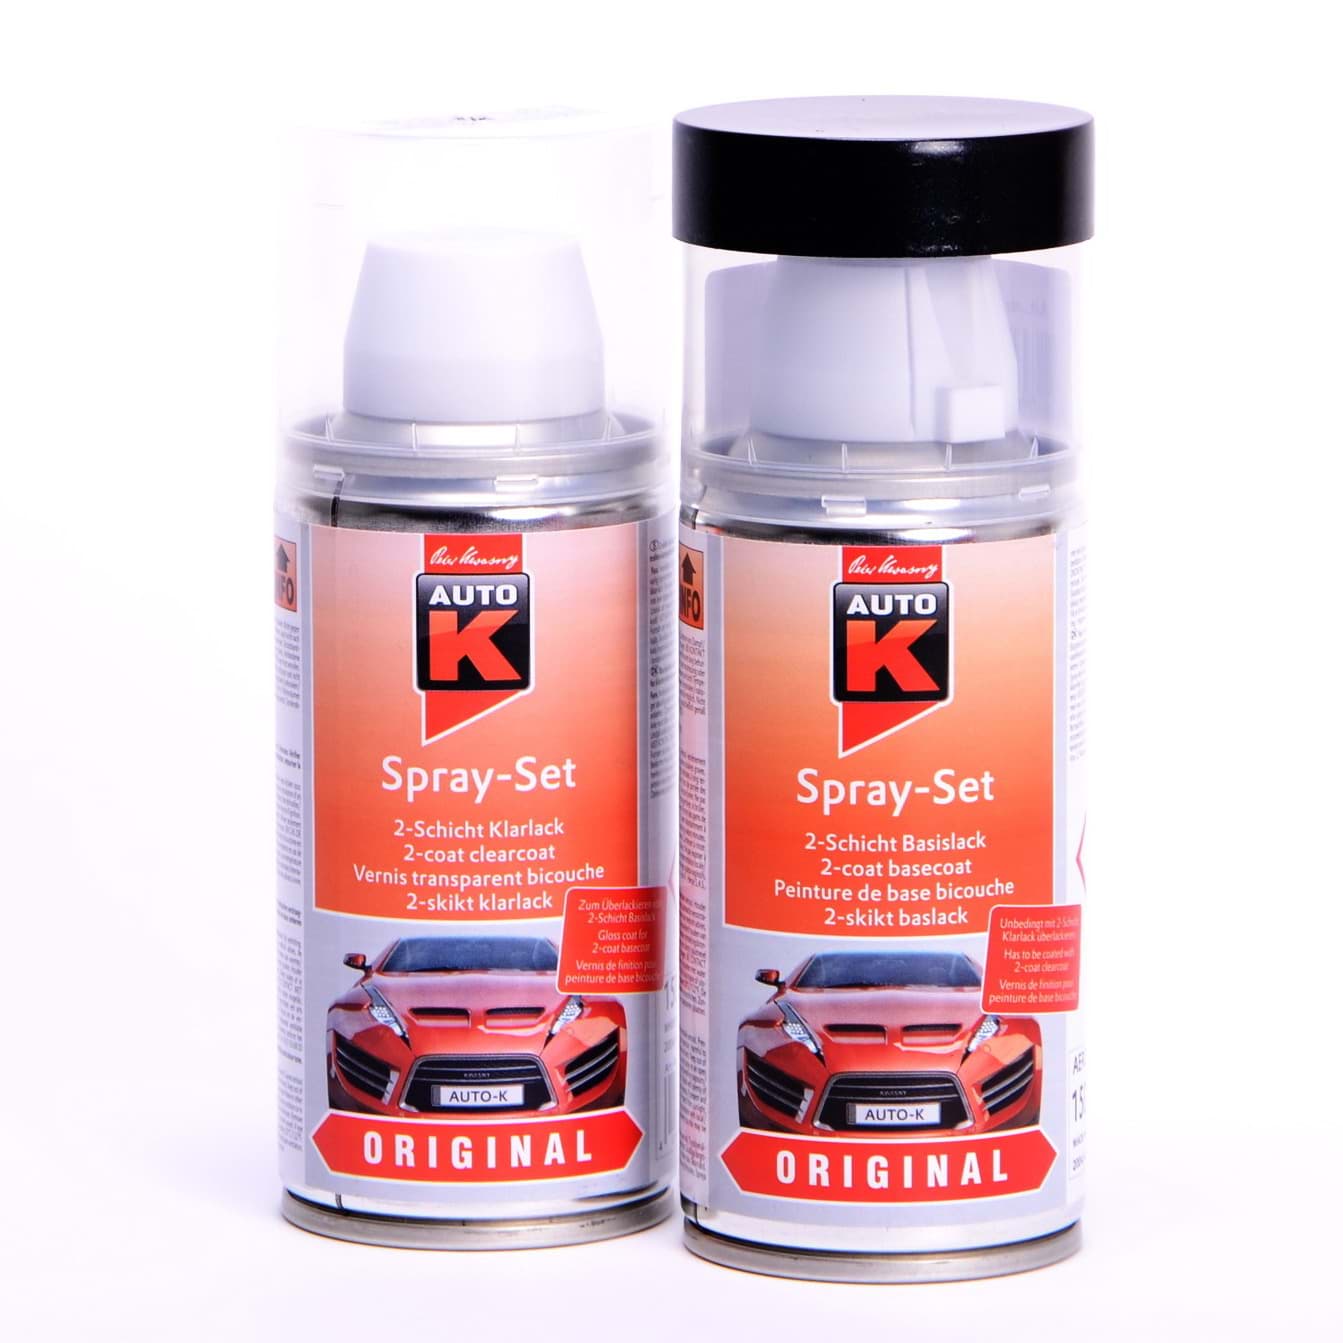 Auto-K Spray-Set Autolack für Opel 270 Spectralblau met 21367 resmi